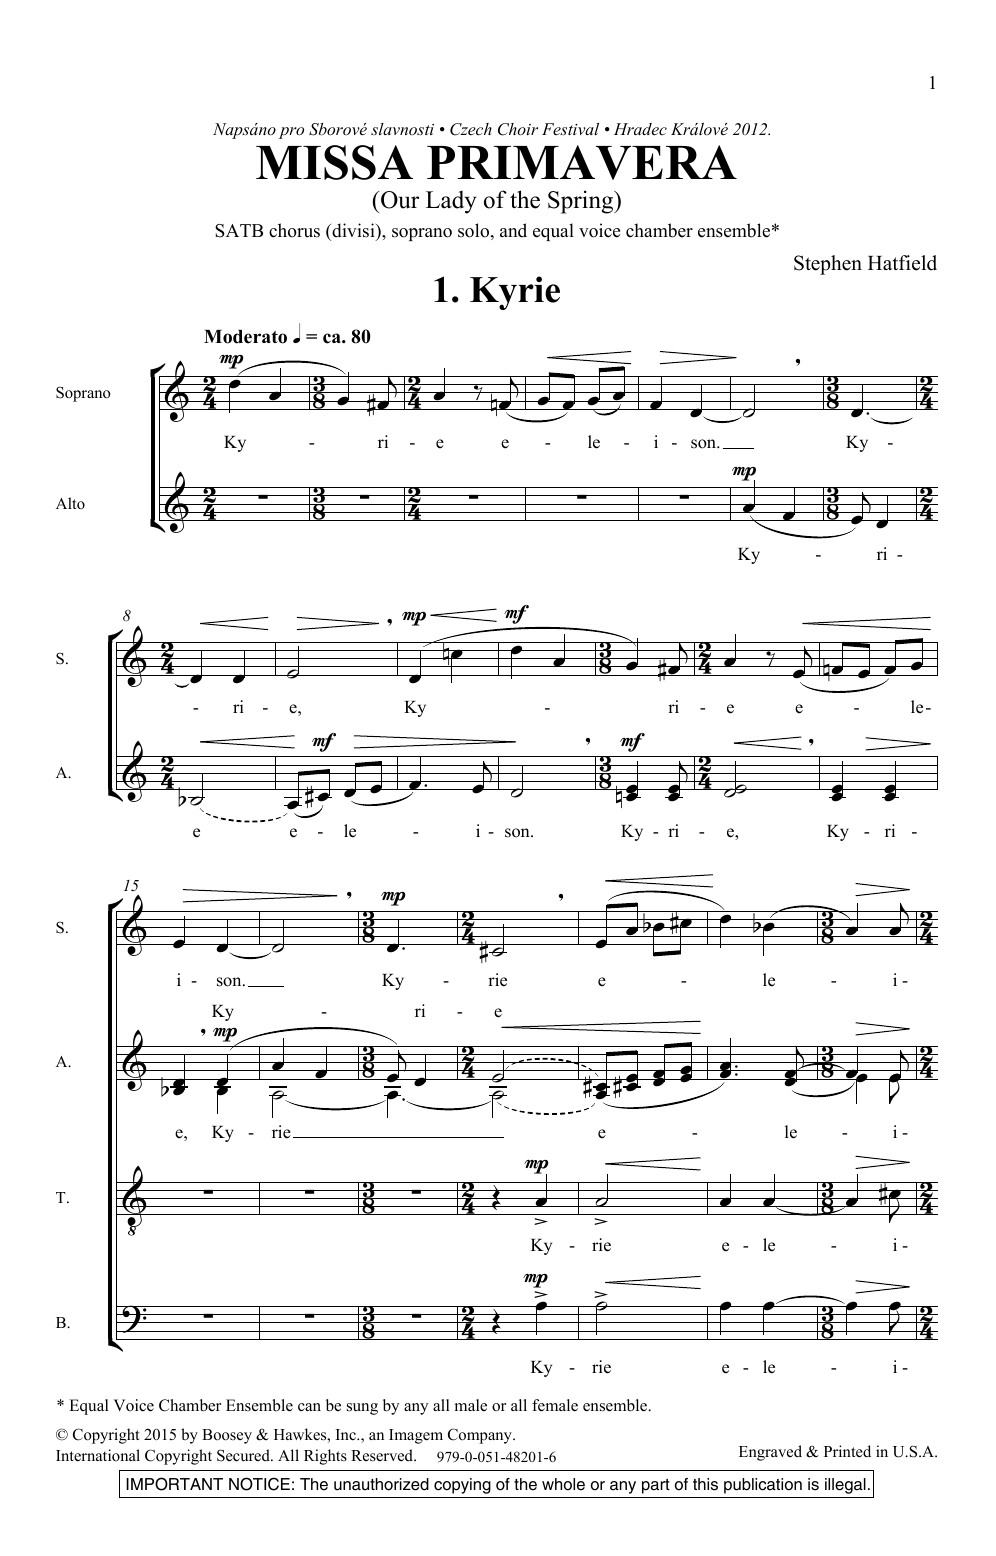 Stephen Hatfield Missa Primavera Sheet Music Notes & Chords for SATB - Download or Print PDF